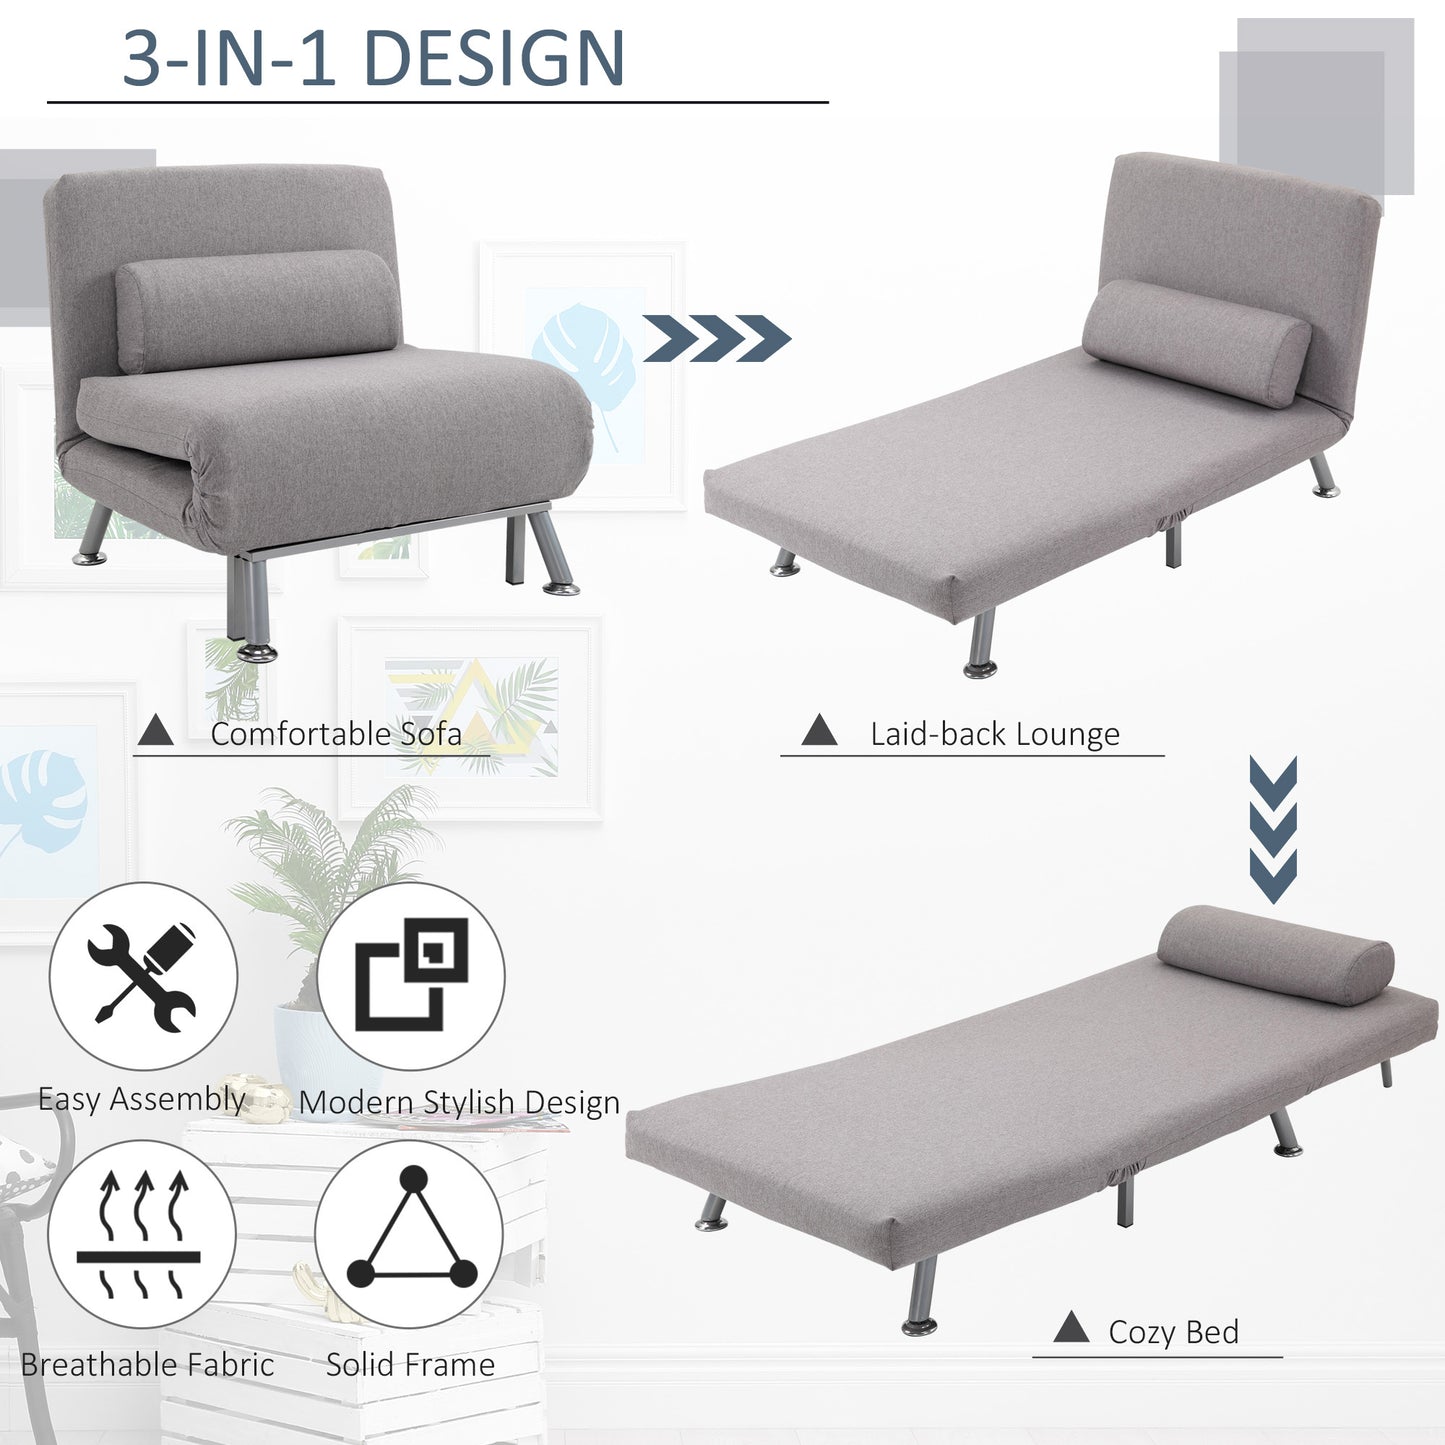 HOMCOM Single Sofa Bed Futon Chair Sleeper, Foldable Portable Lounge Couch, Living Room Furniture Grey